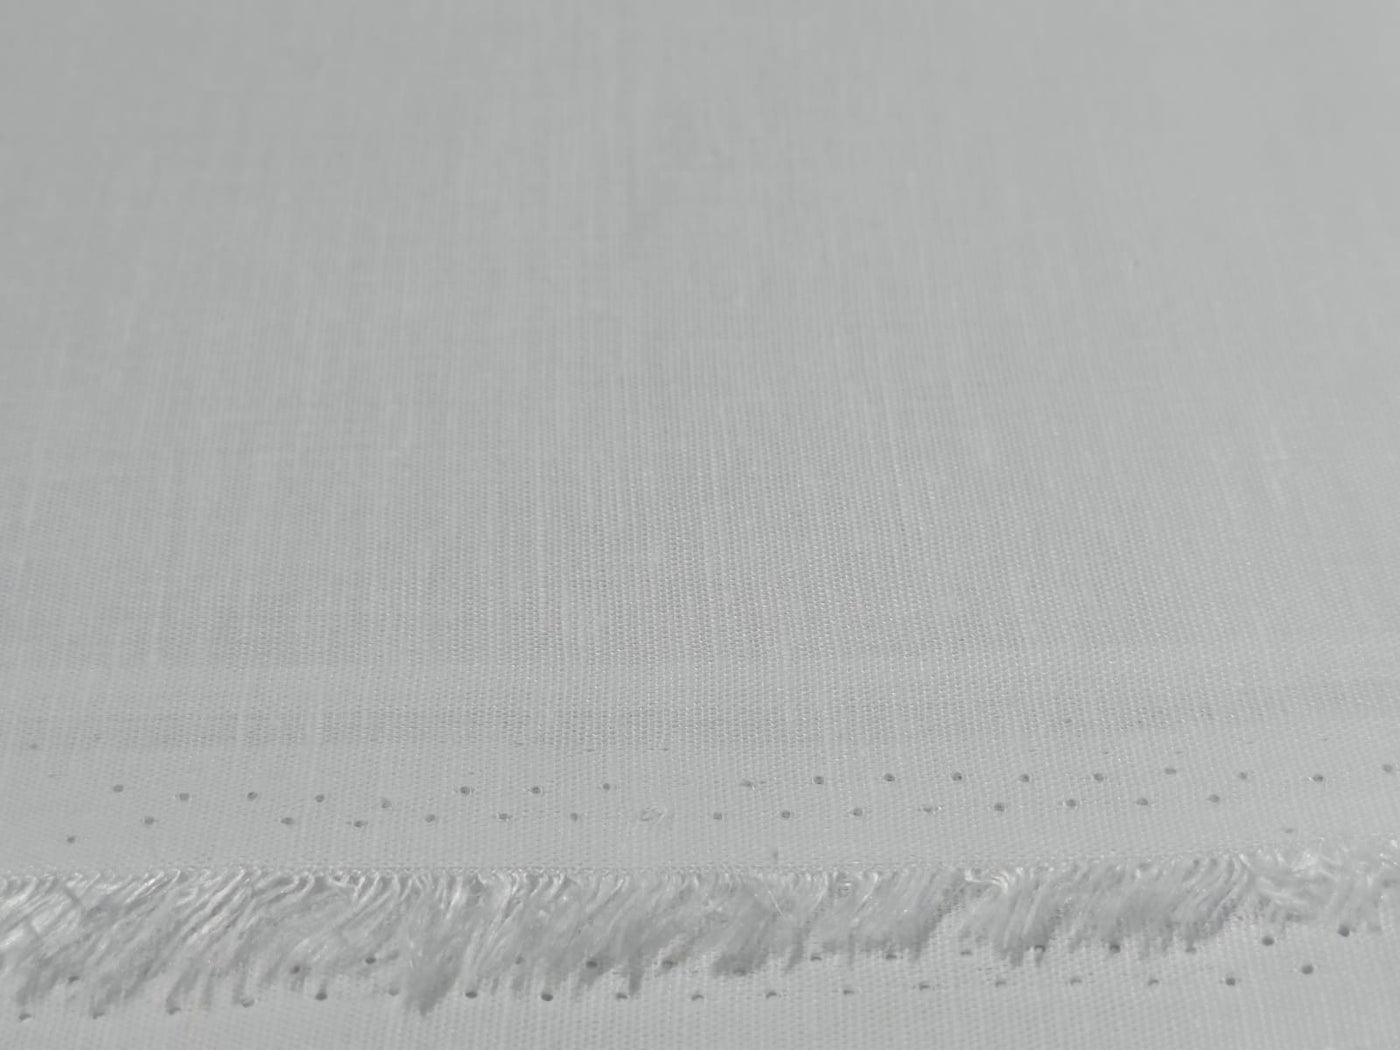 100% Linen premium quality fabric 44" wide [12903]